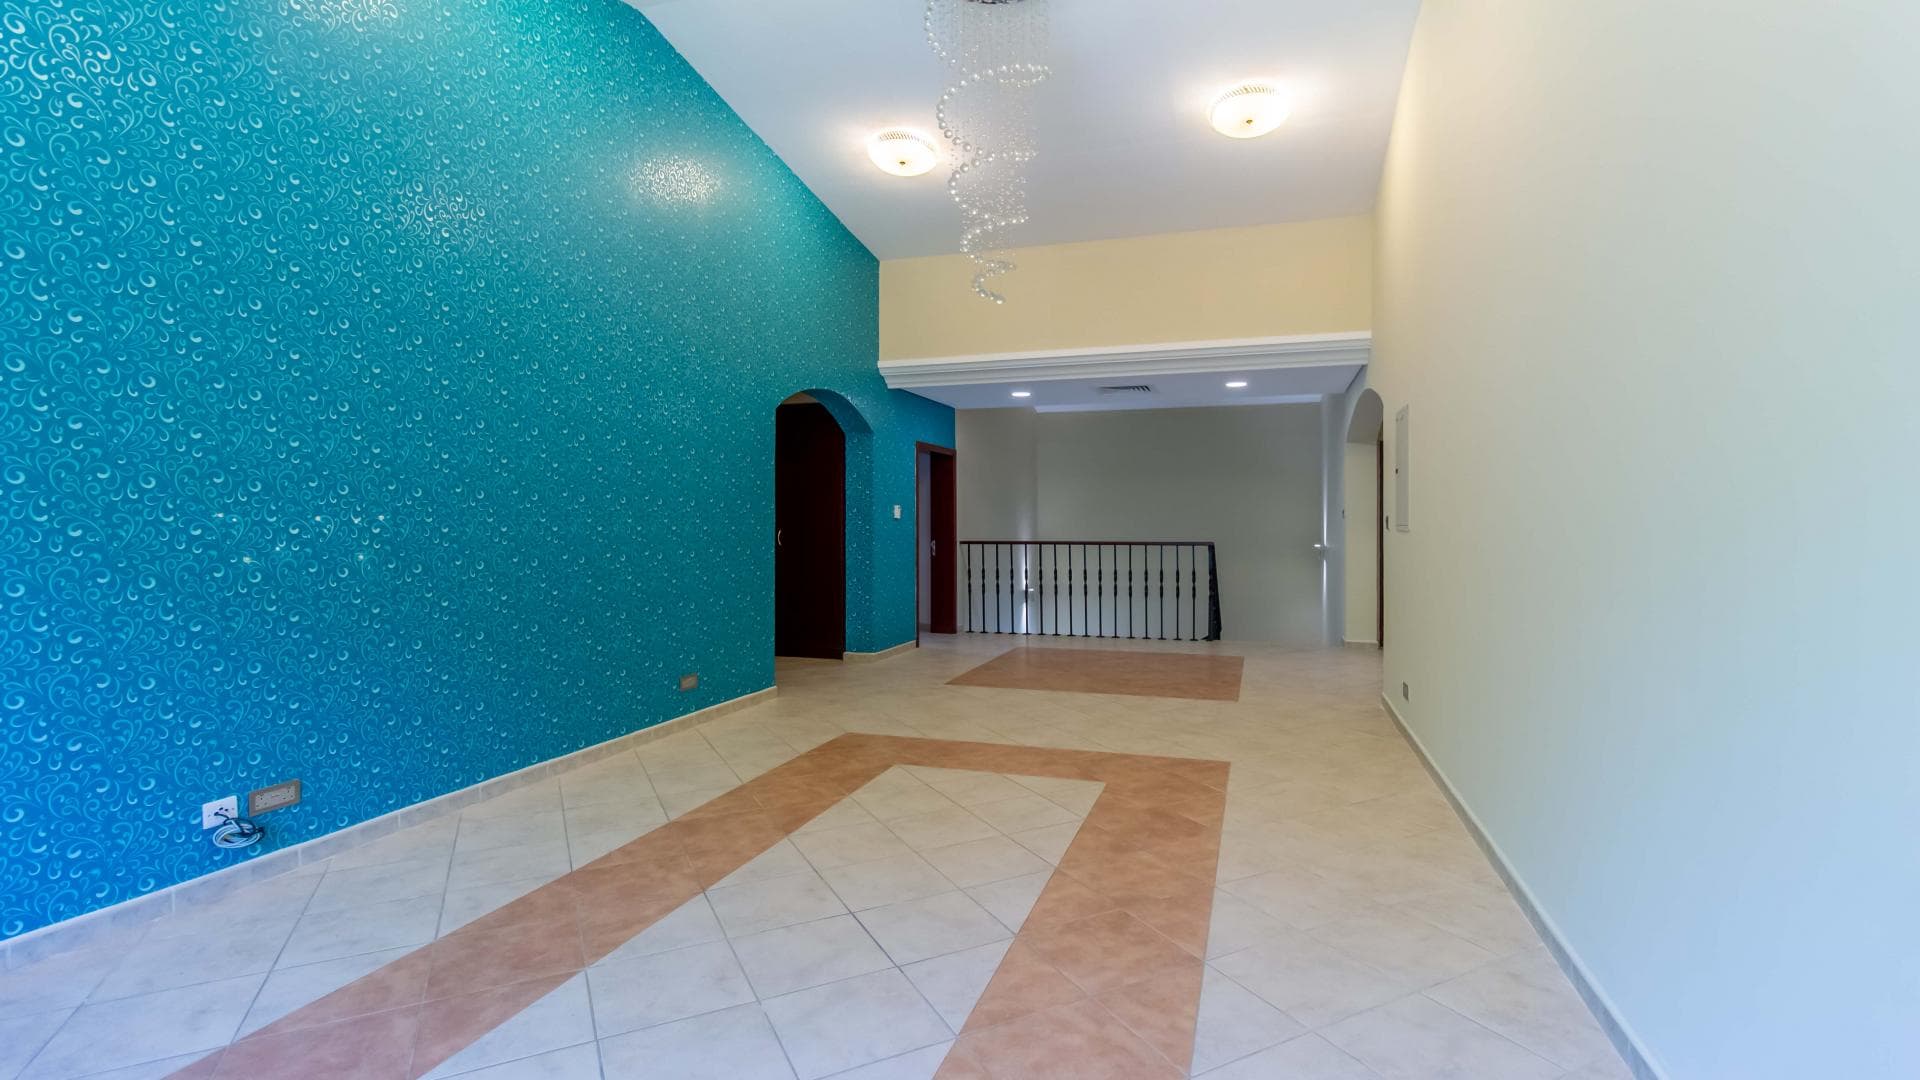 5 Bedroom Villa For Rent Al Thamam 36 Lp37795 173cc1ecb7fccf00.jpg